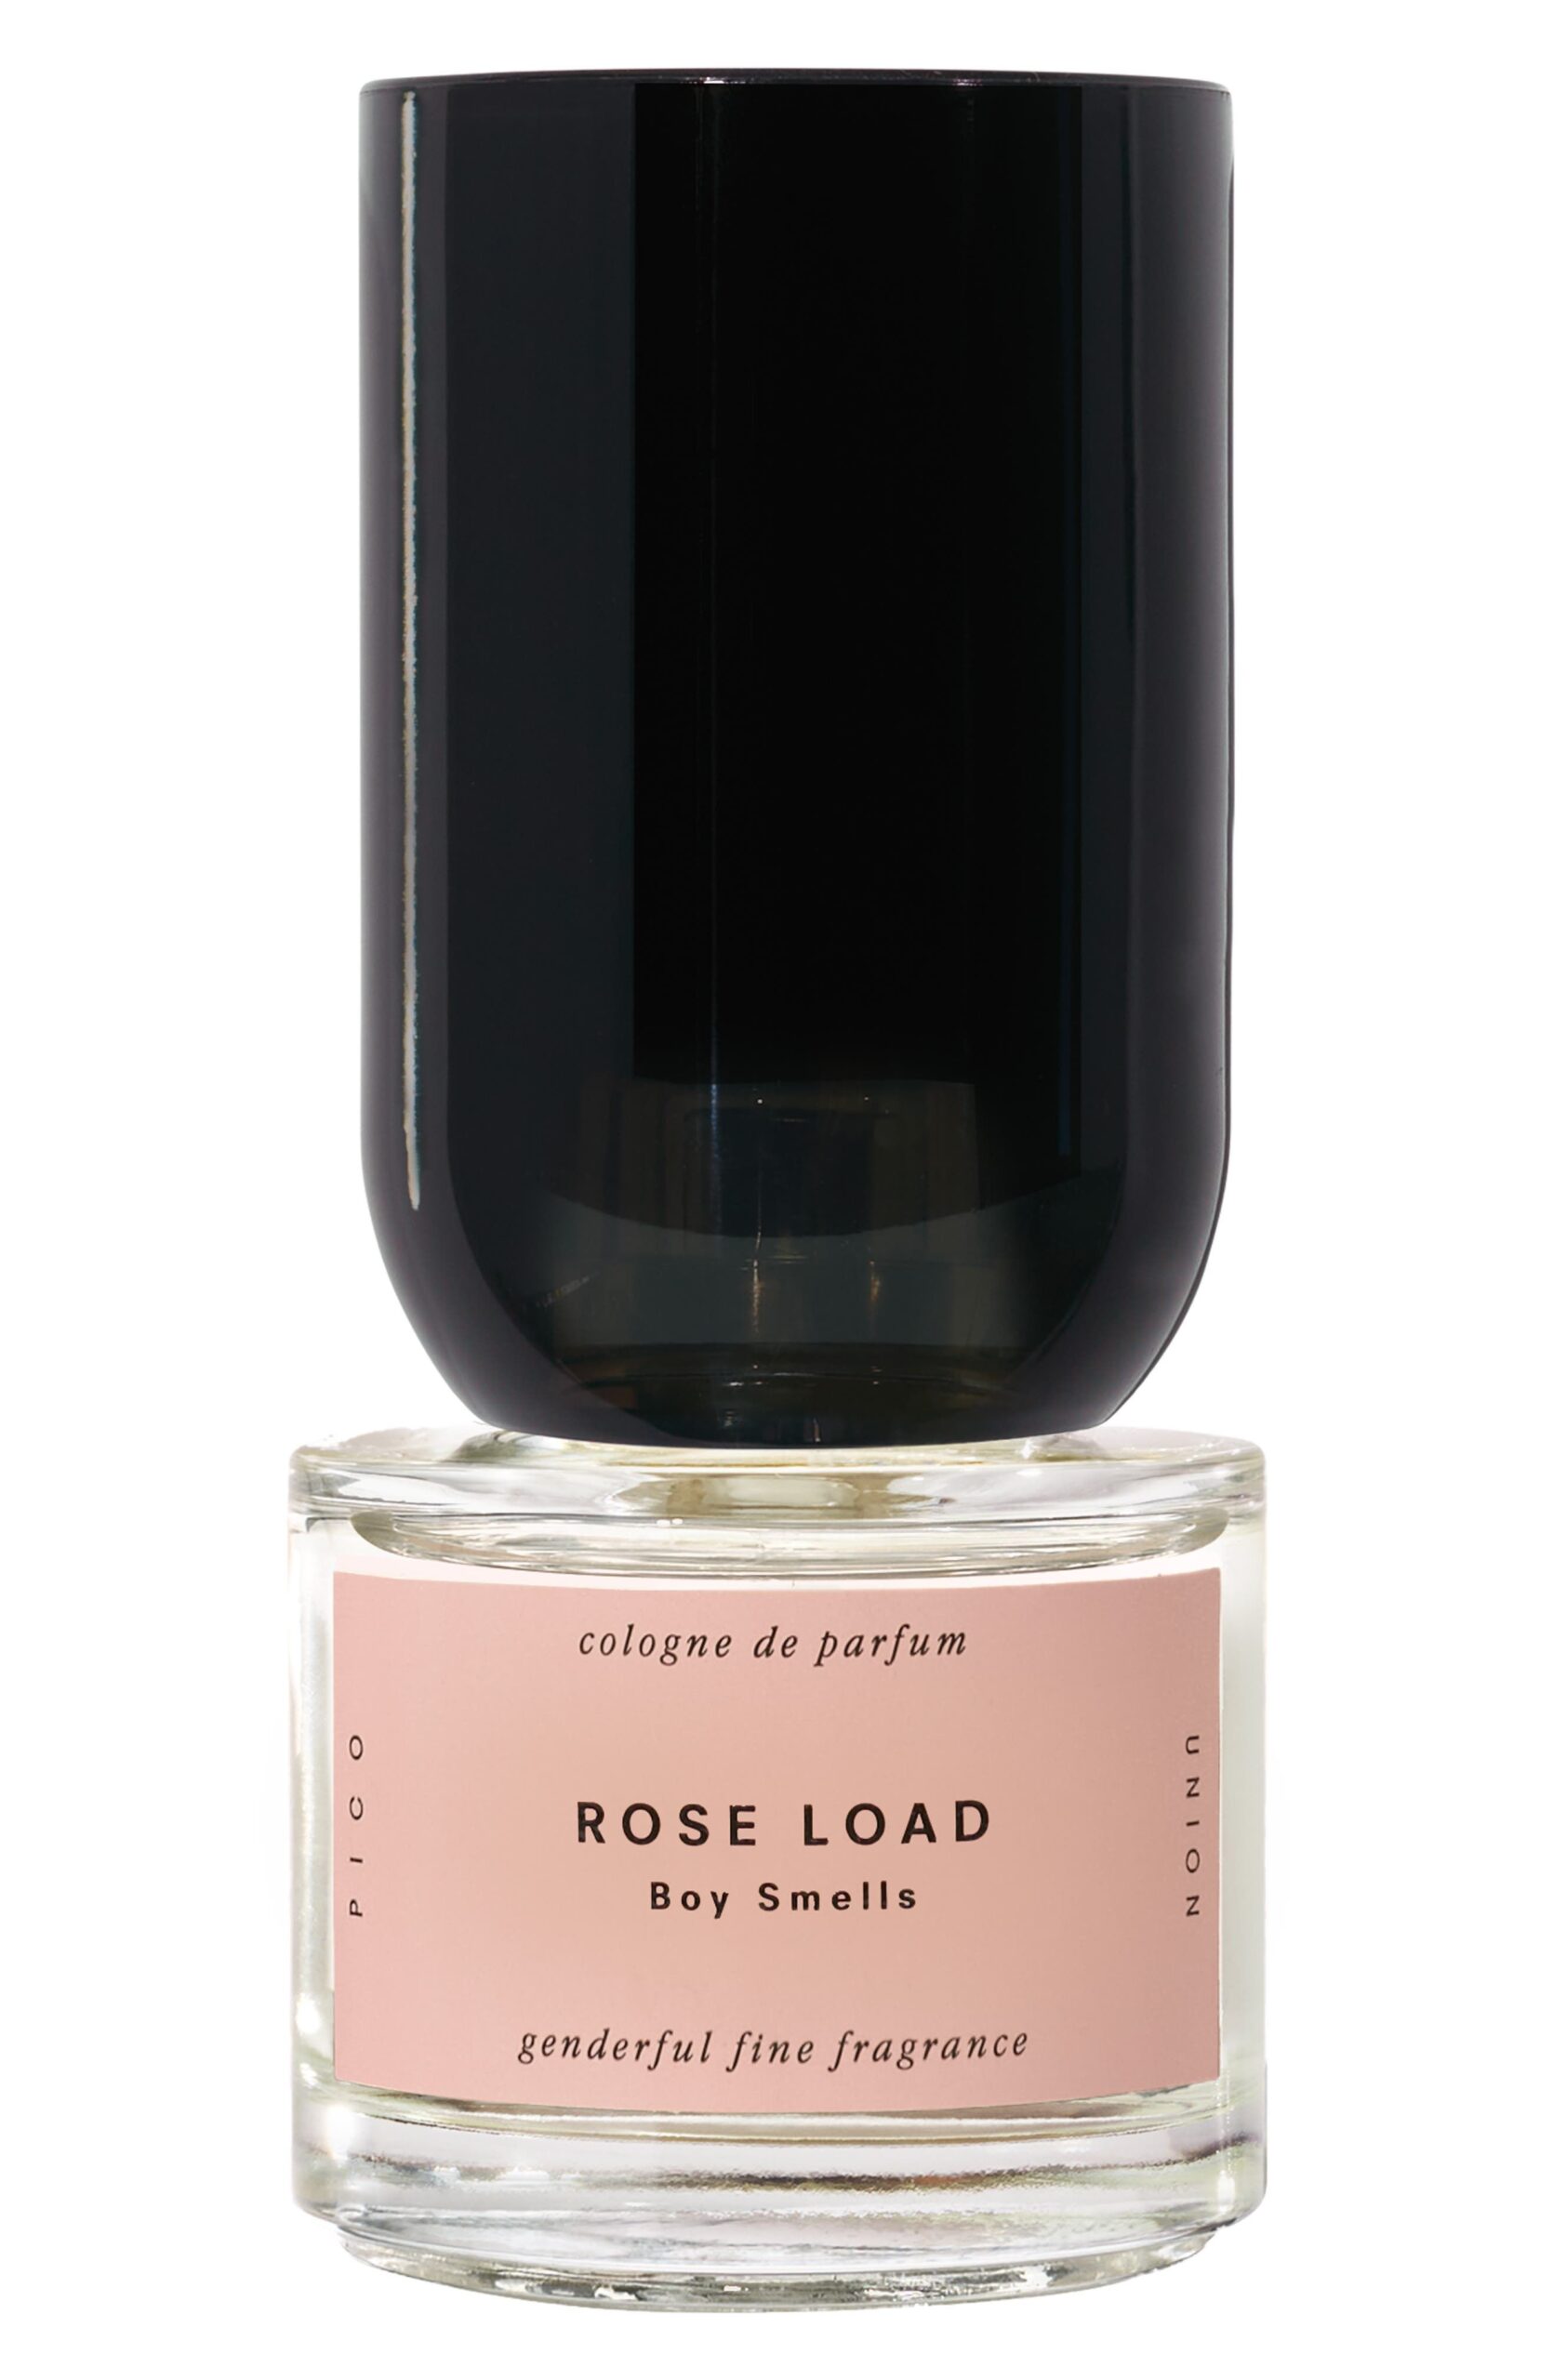 Rose Load by Boy Smells’